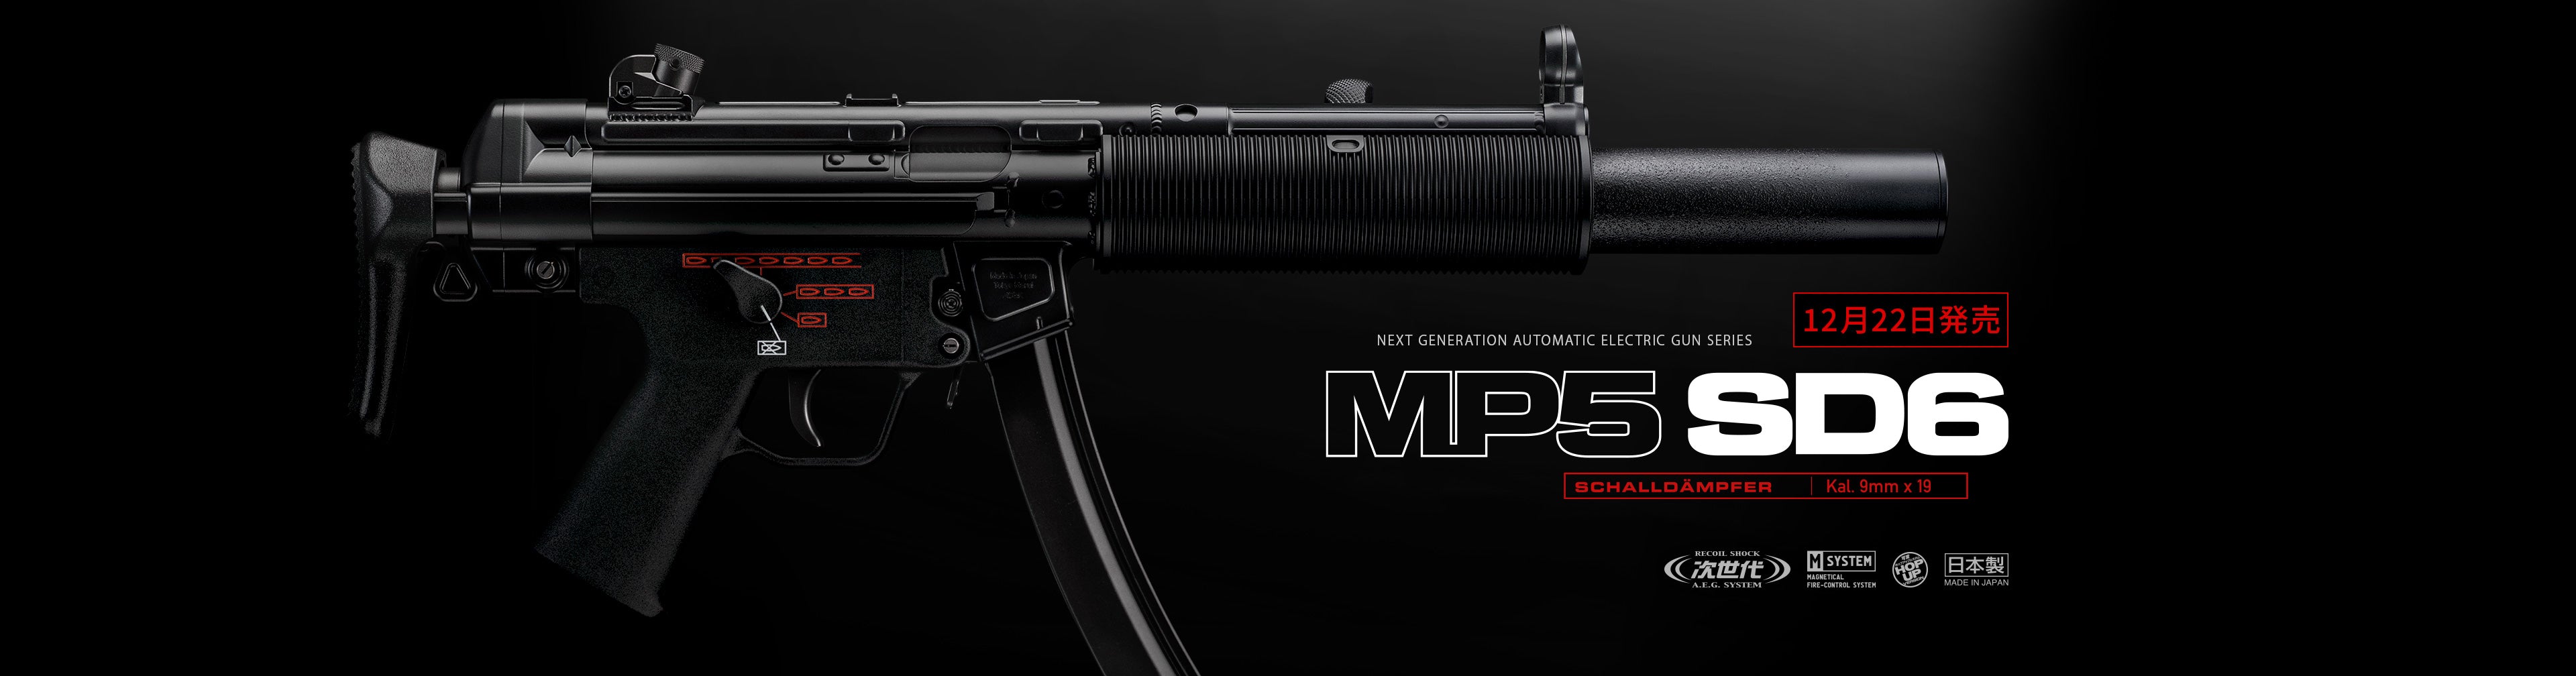 The new MP5 SD6 Next Generation AEG